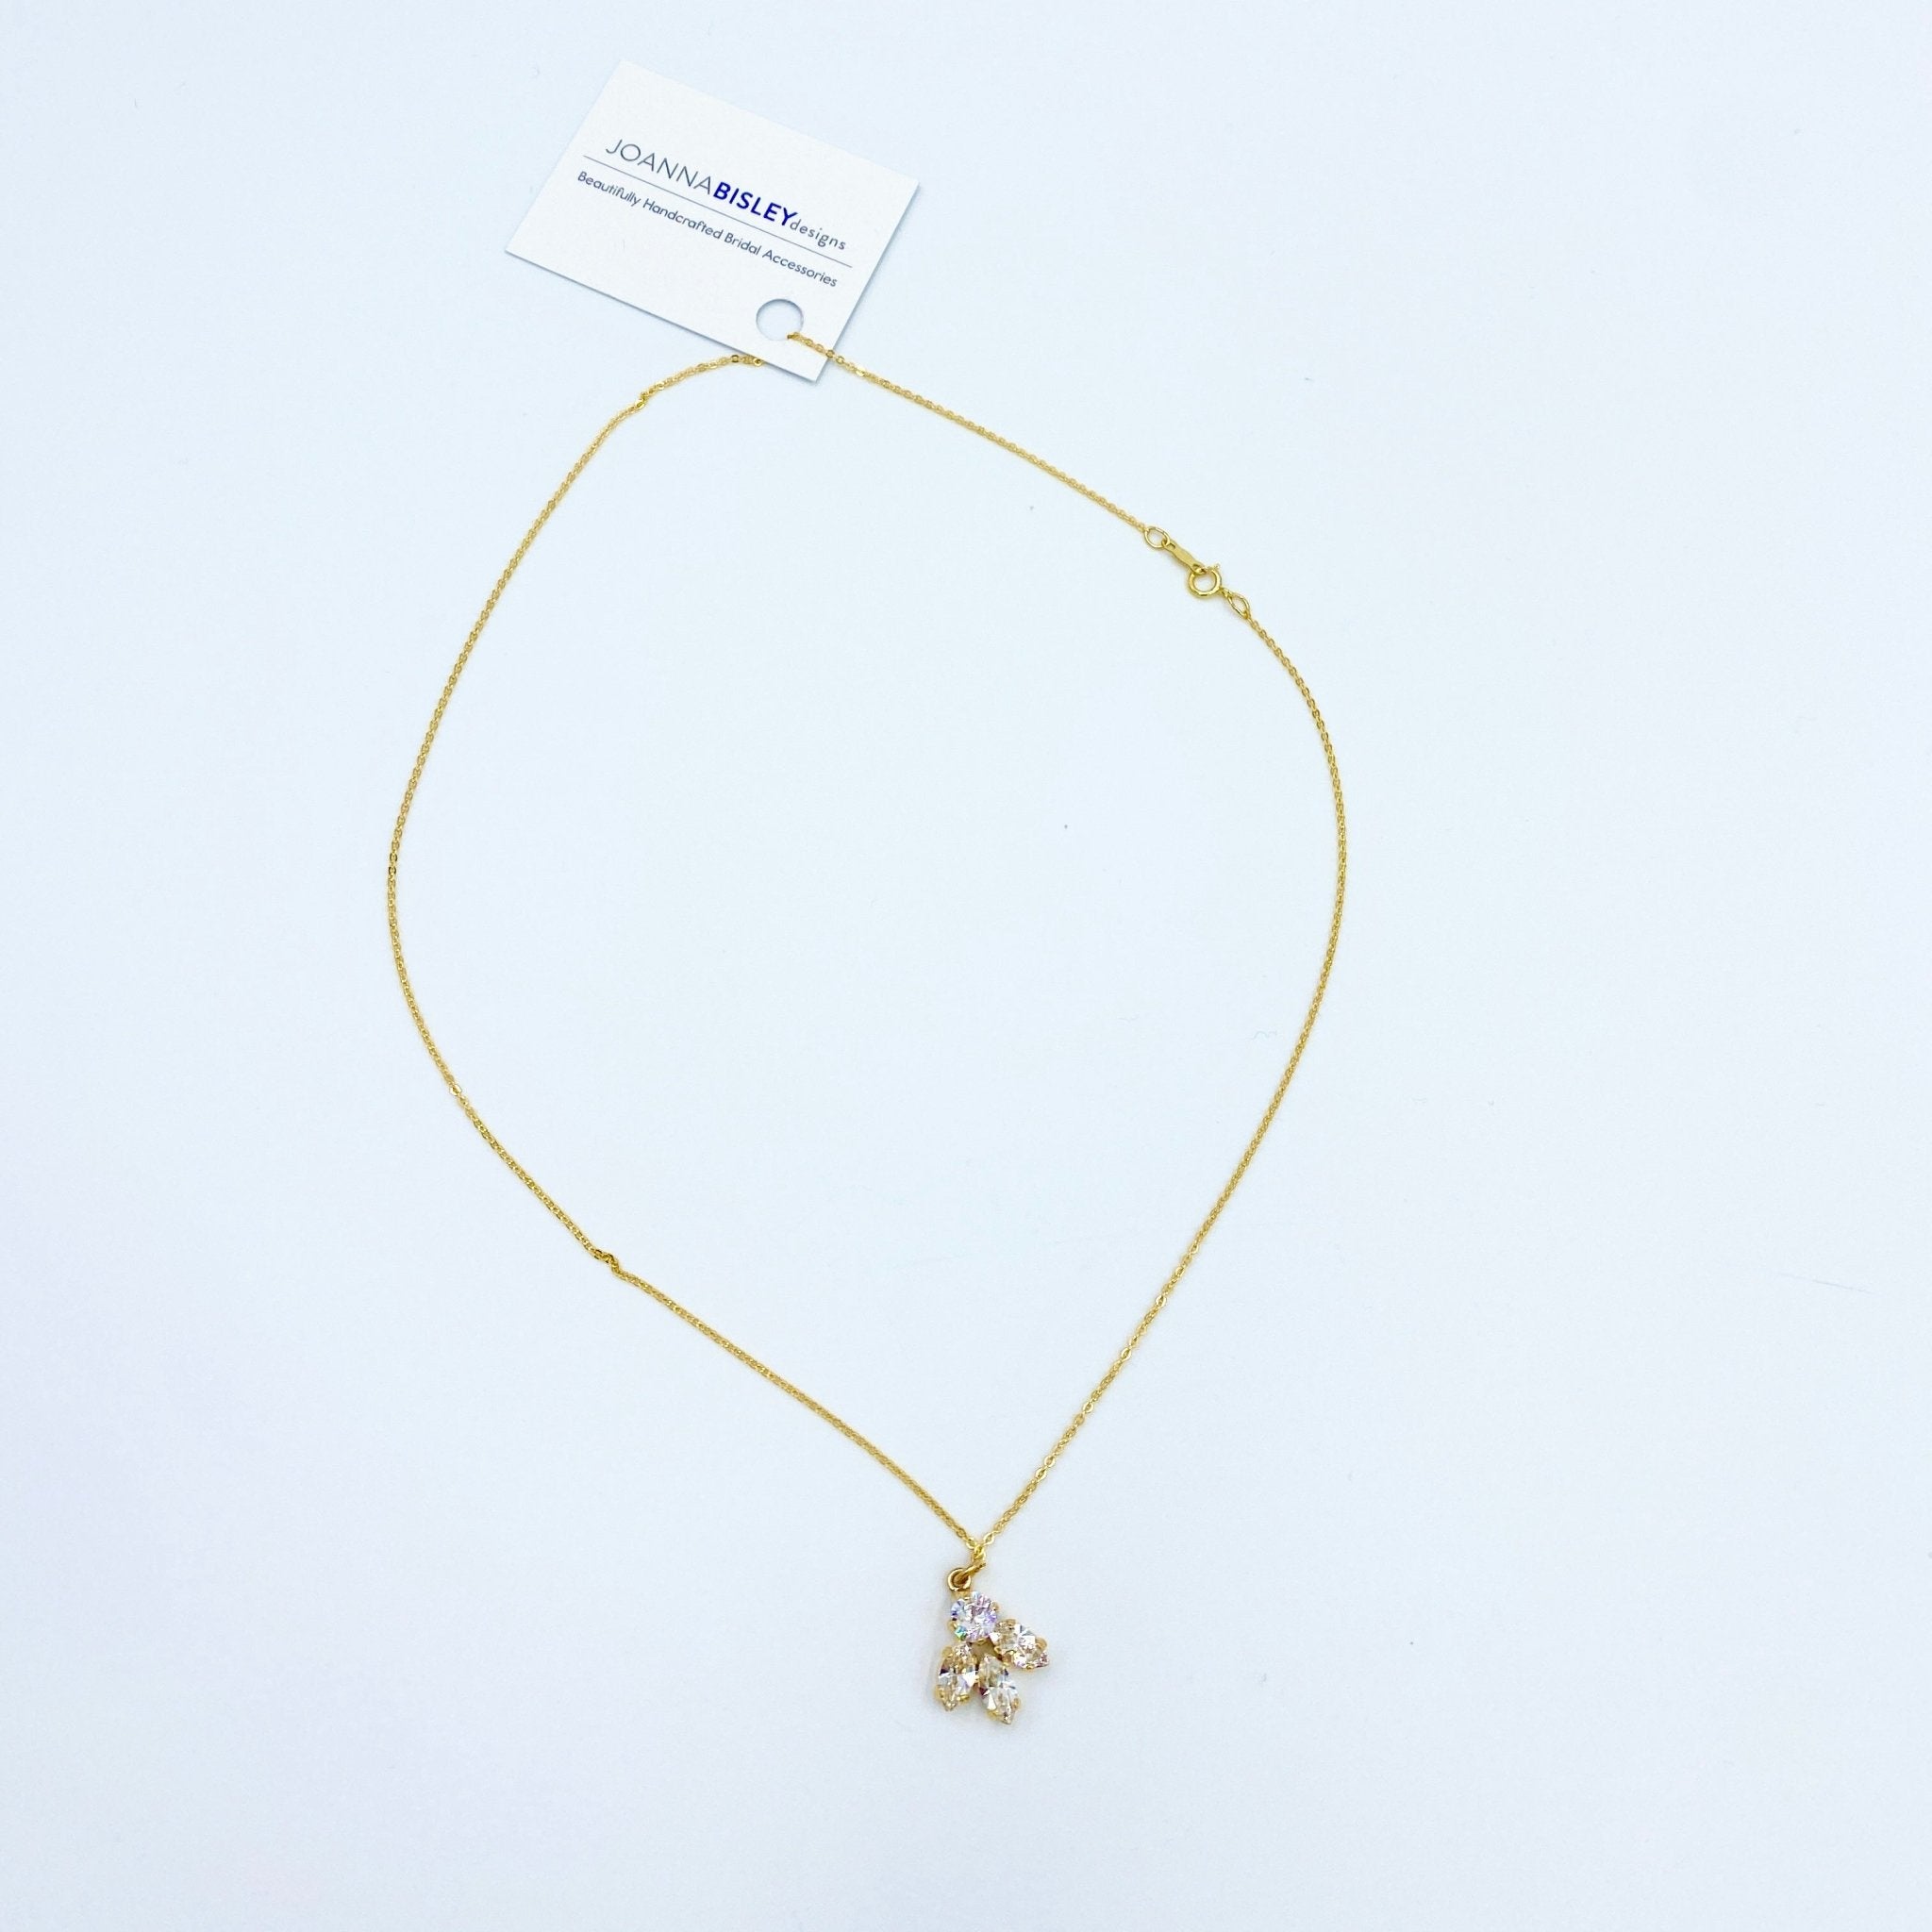 Joanna Bisley CLAUDIA Swarovski Crystal 14Kt Goldfill Necklace - My Filosophy